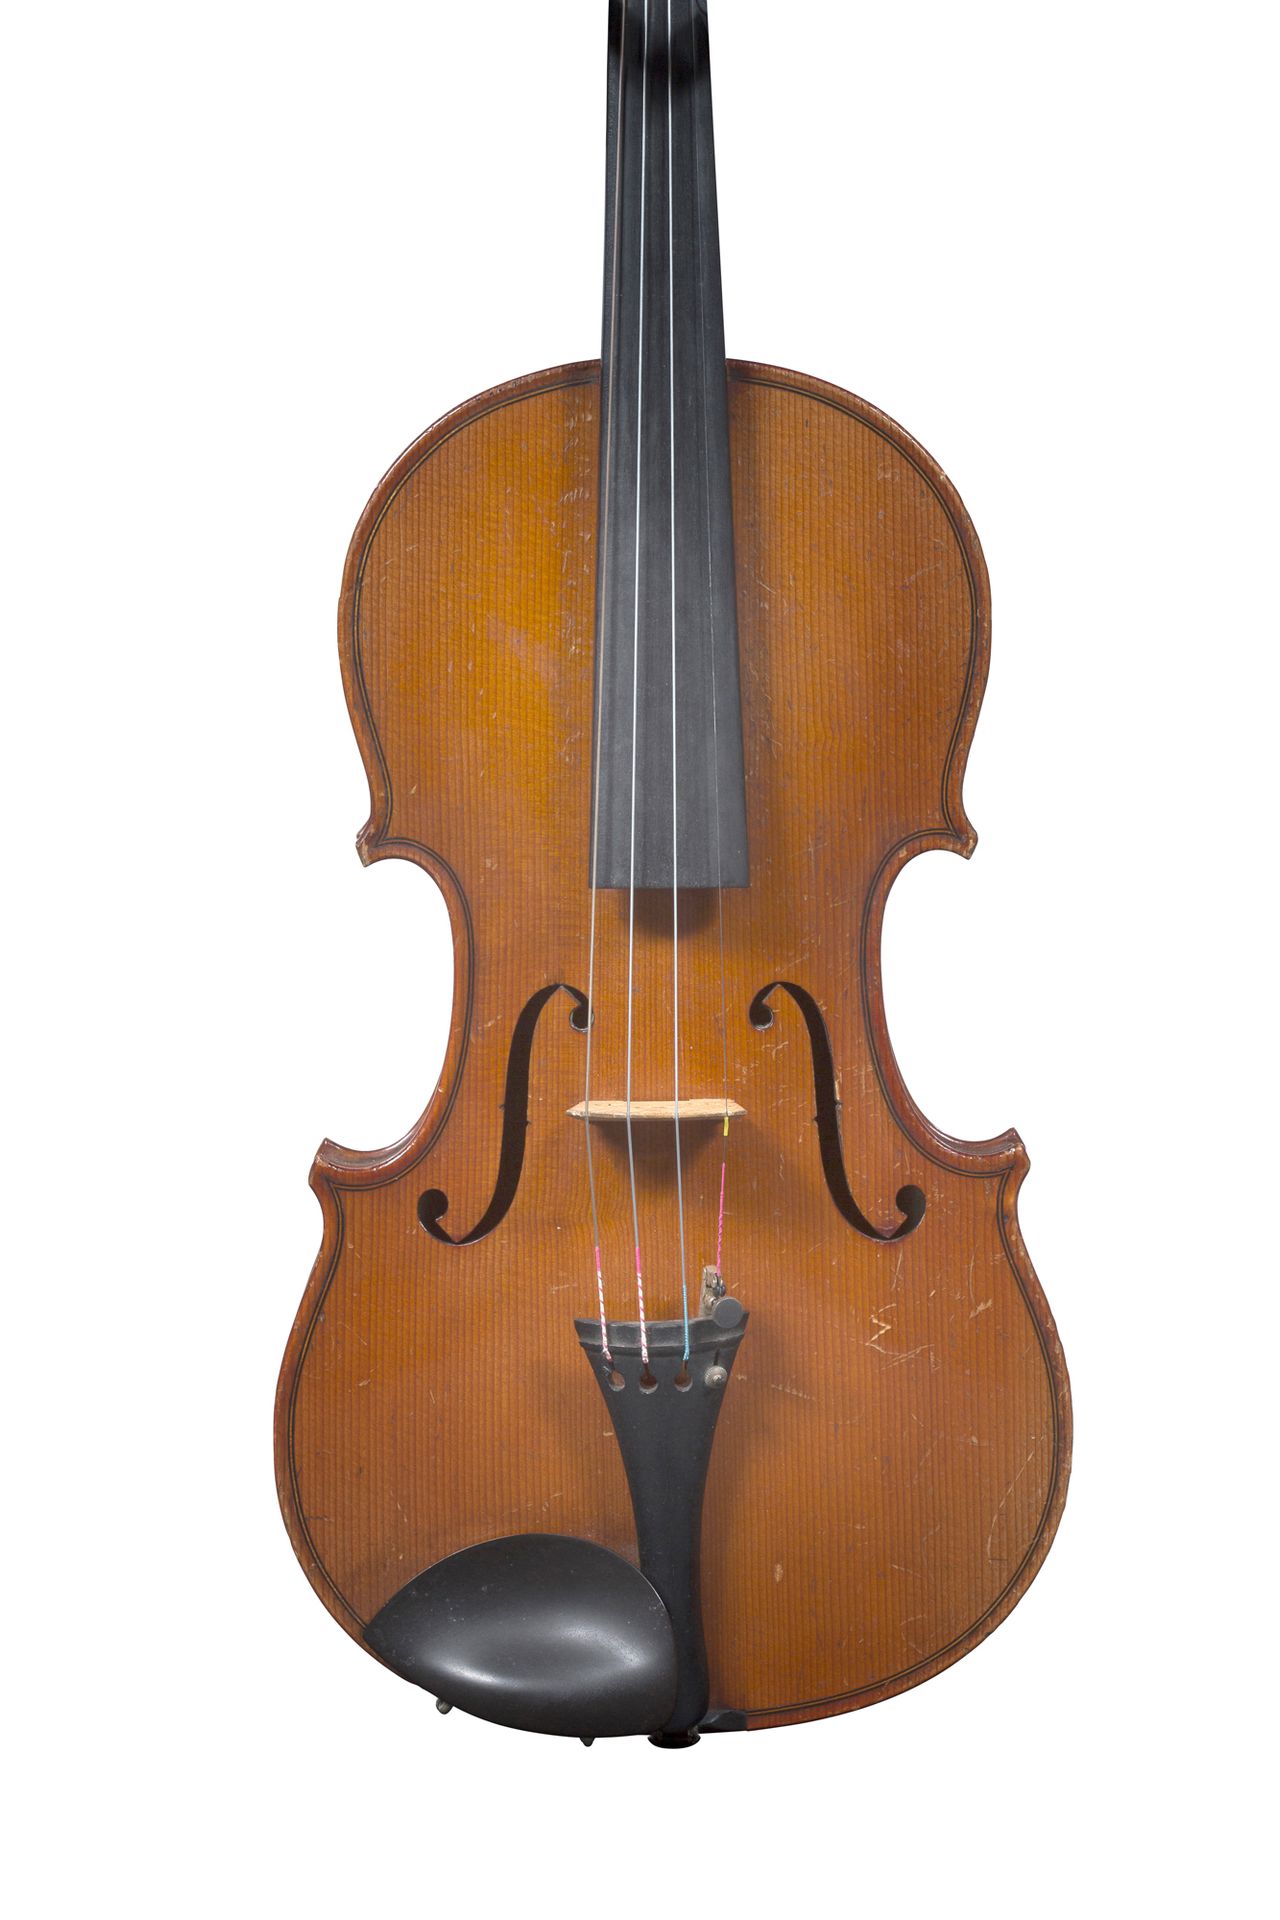 Null 20世纪初在Mirecourt制造的漂亮小提琴
可能由Laberte制作
状况良好 
背面360毫米
出售时有两把学习用琴弓